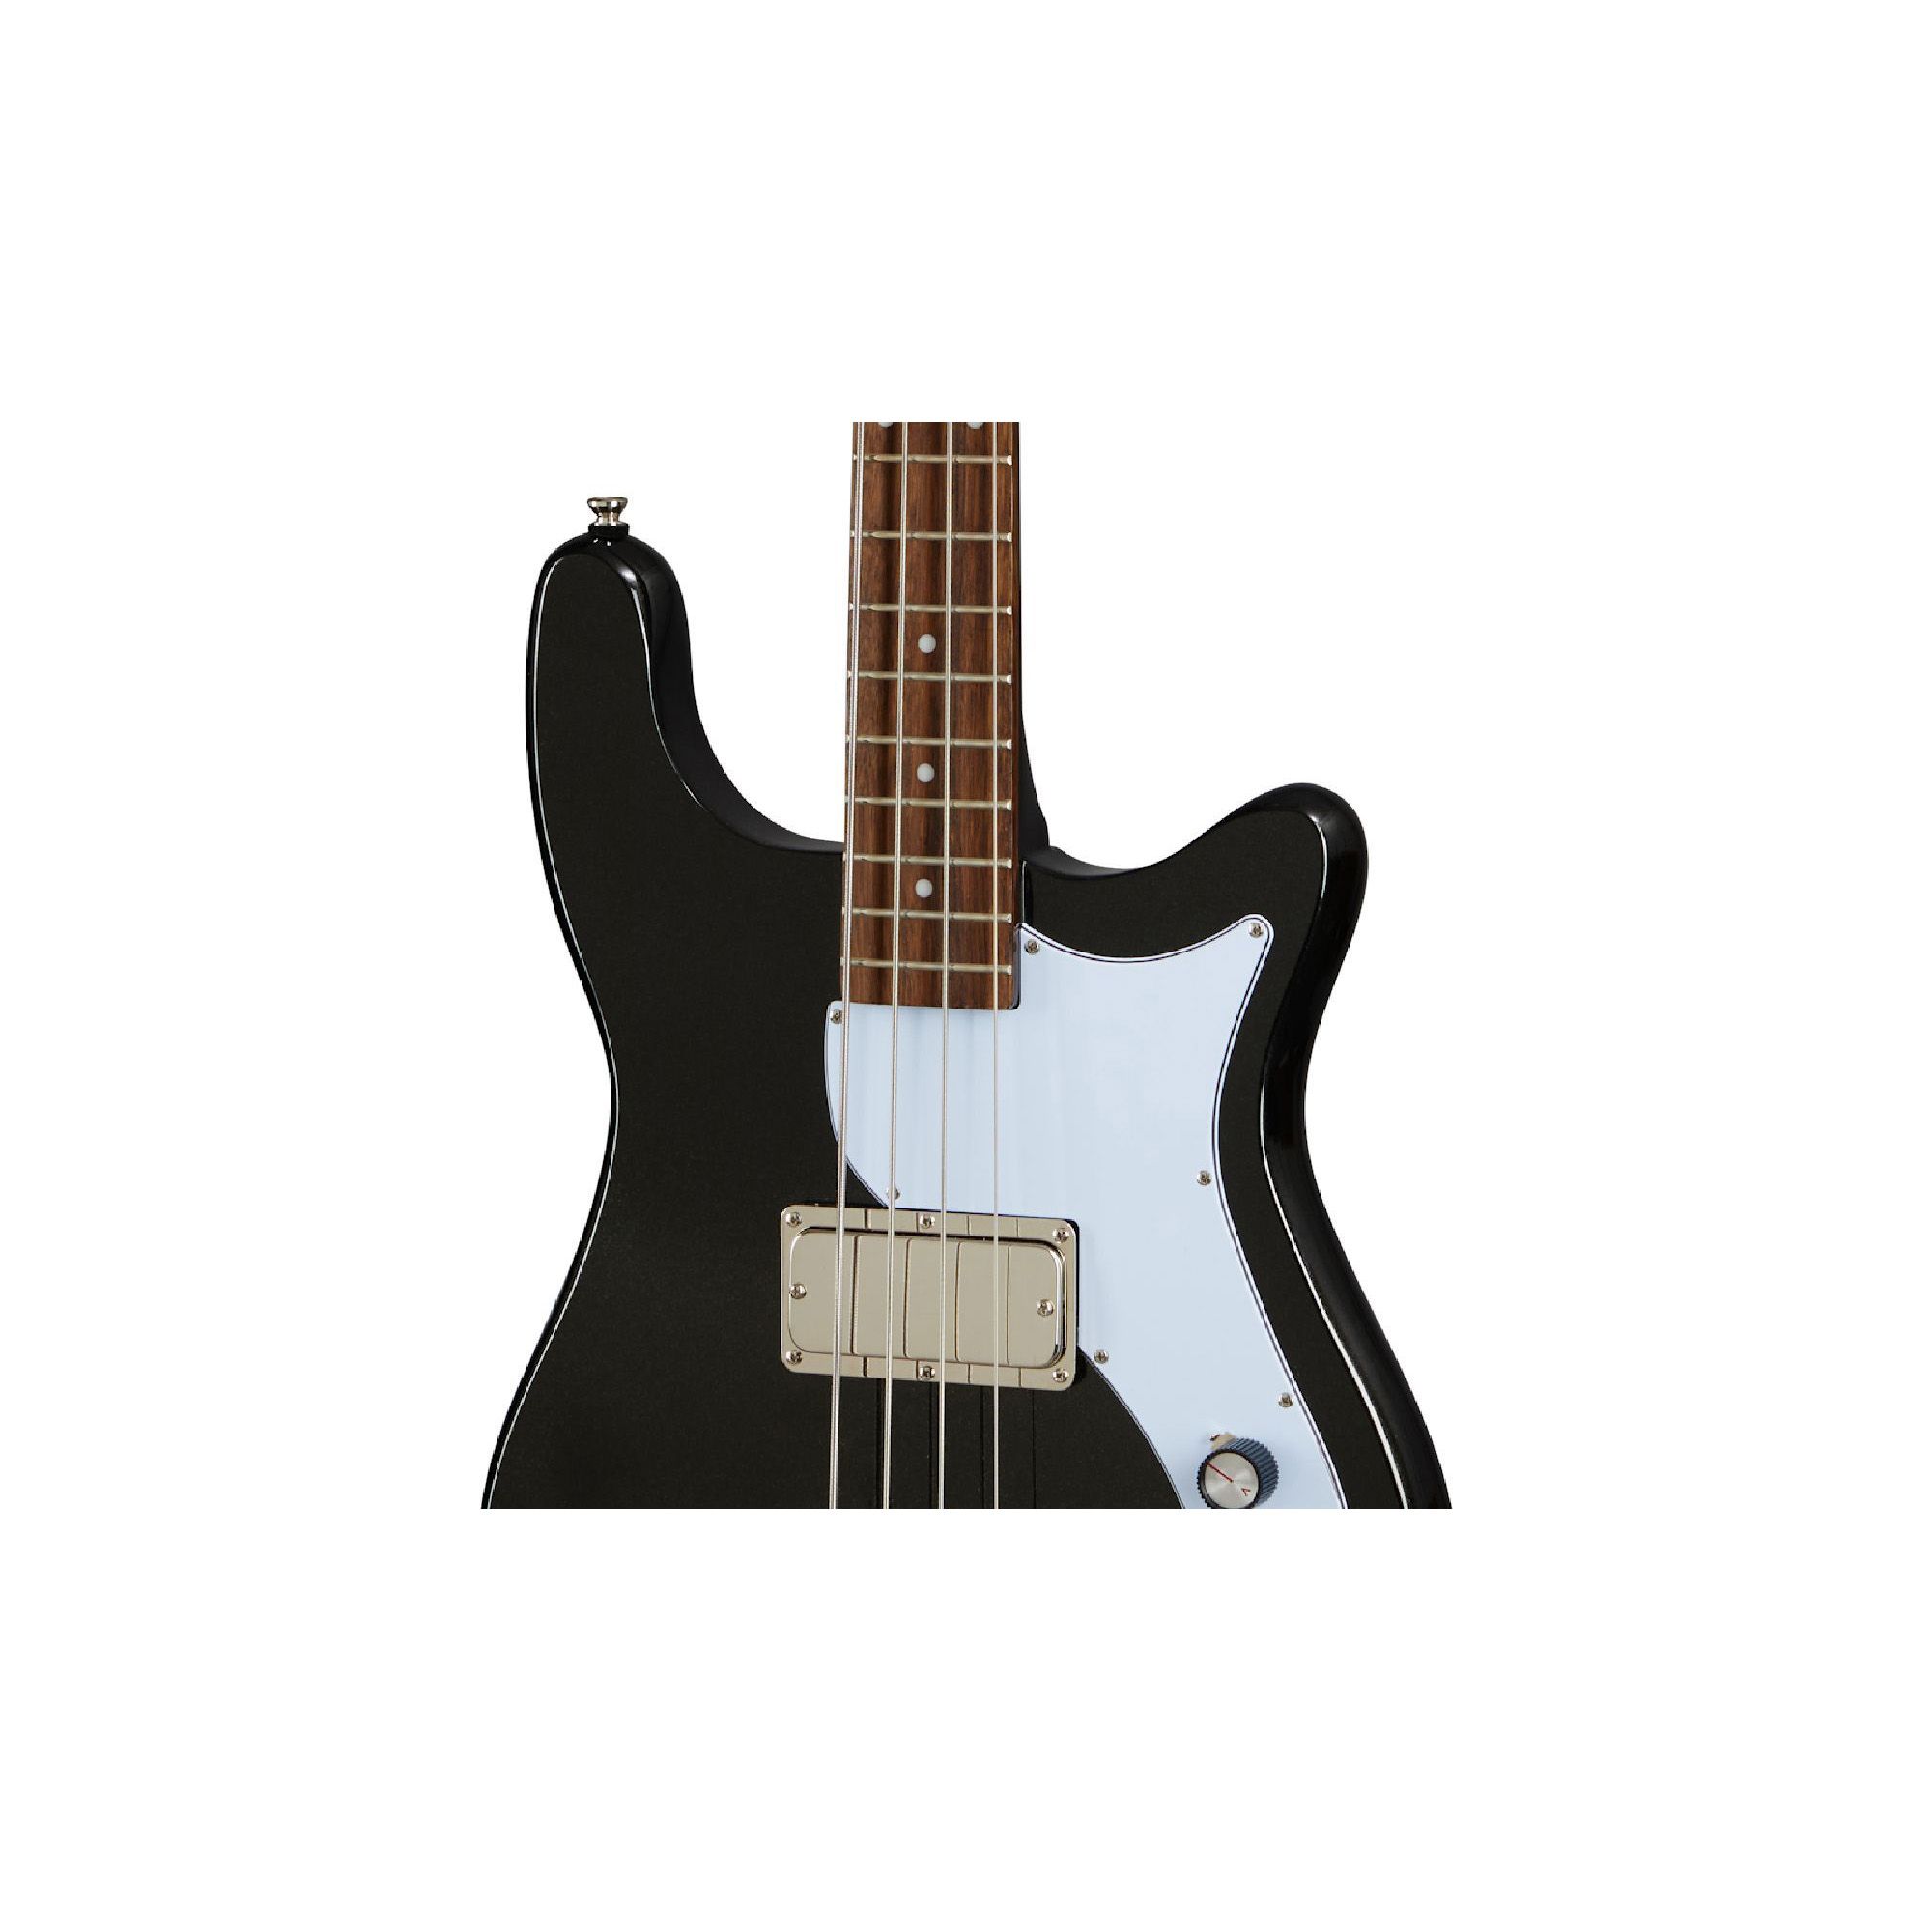 Epiphone Embassy Bass Graphite Black Бас-гитары